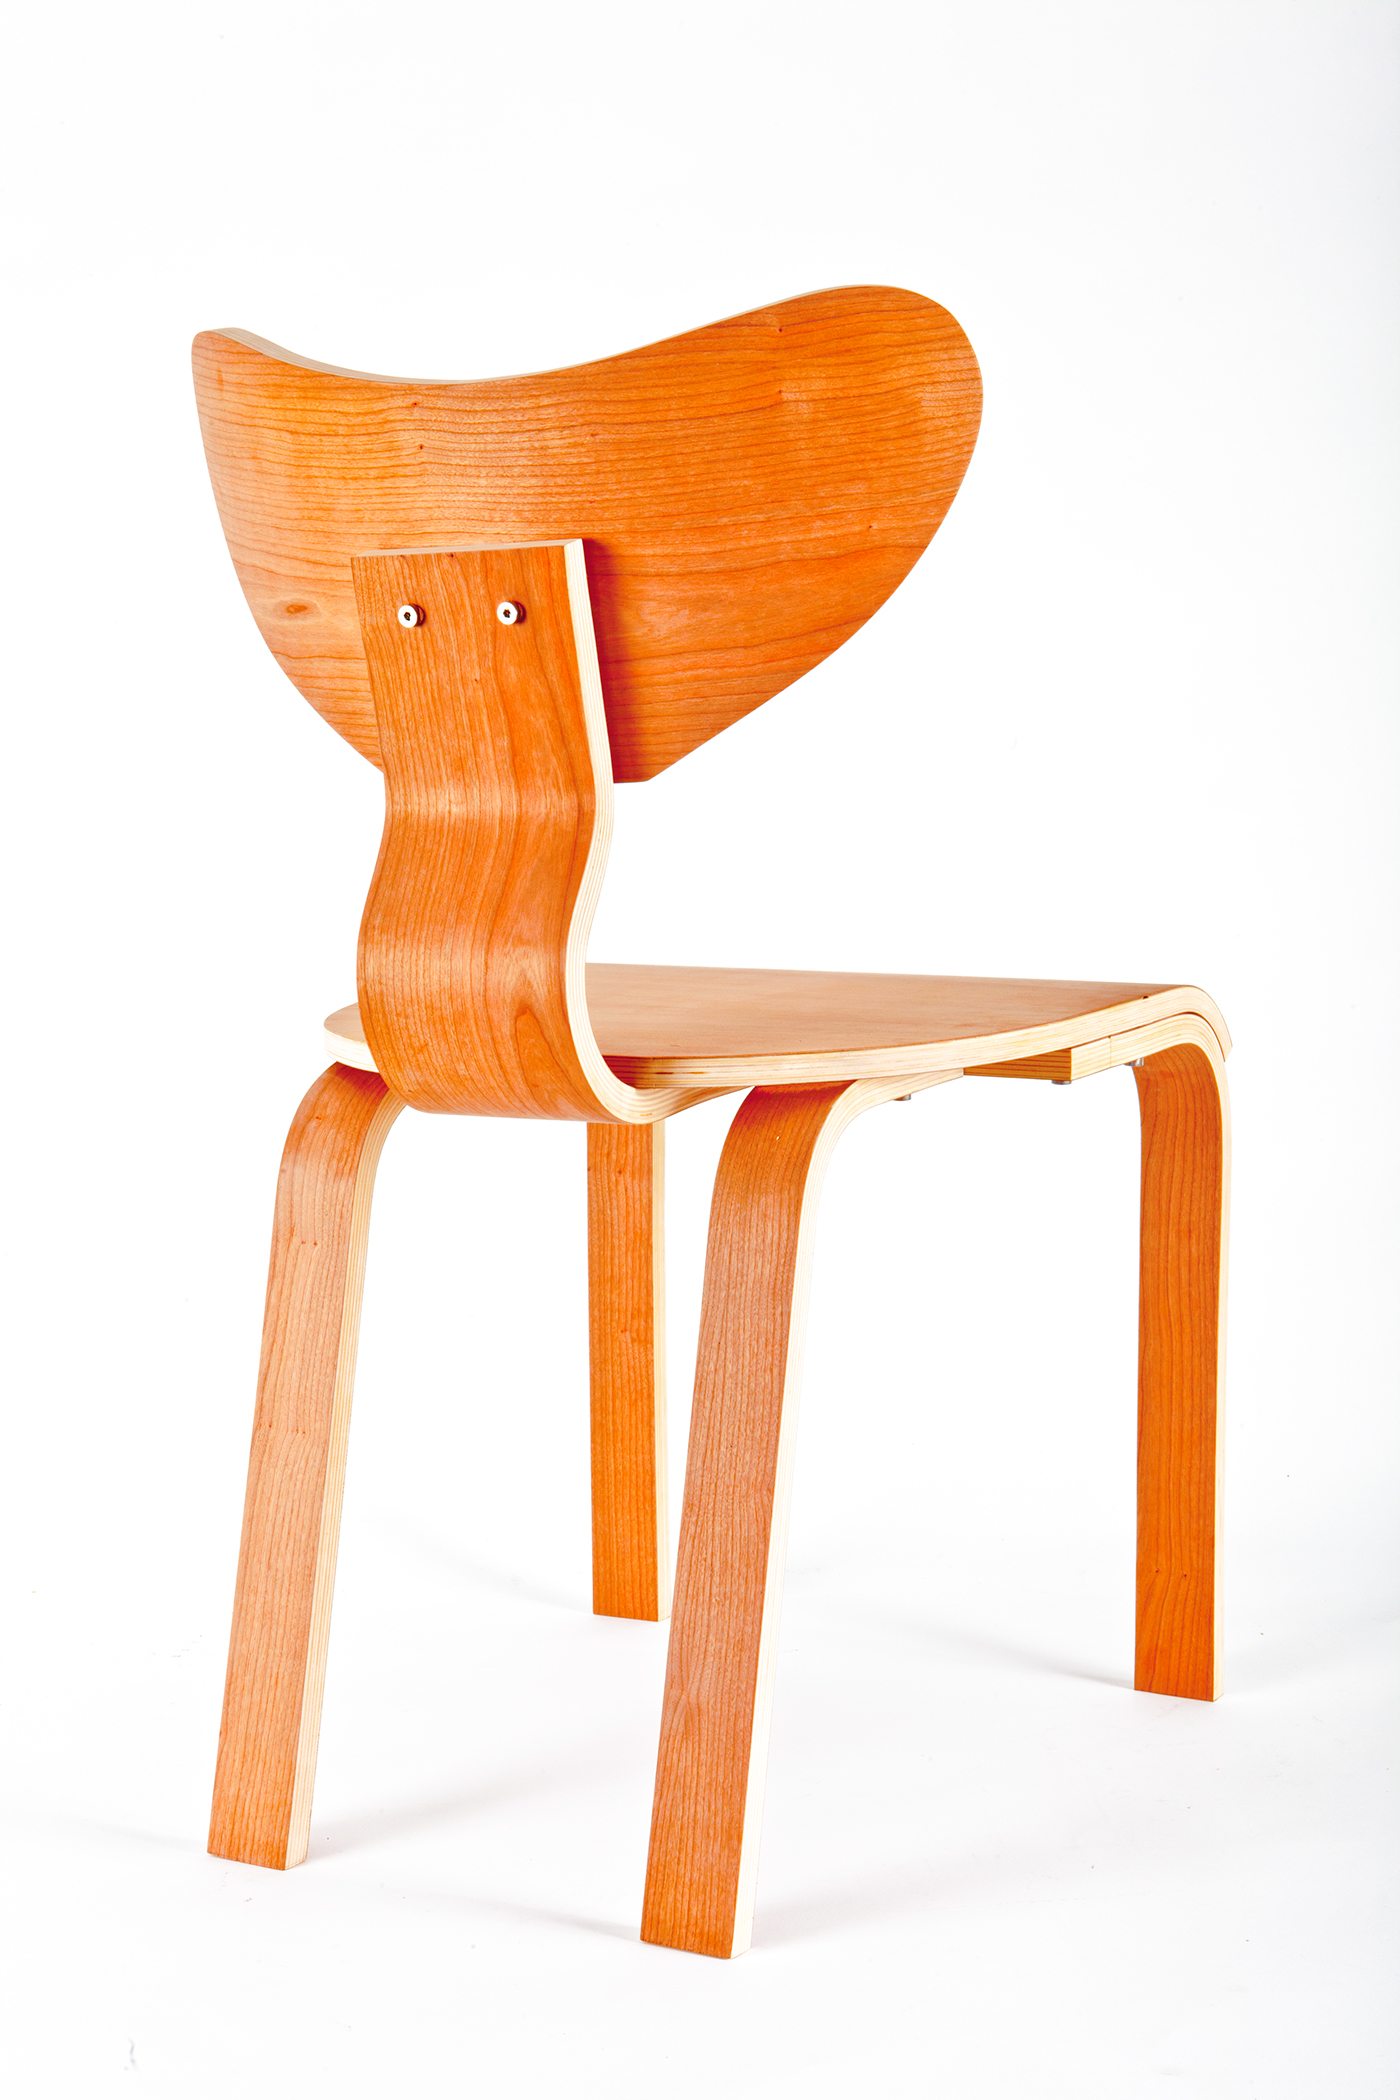 furniture wood chair cherry veneer design modern bentplywood flatpack